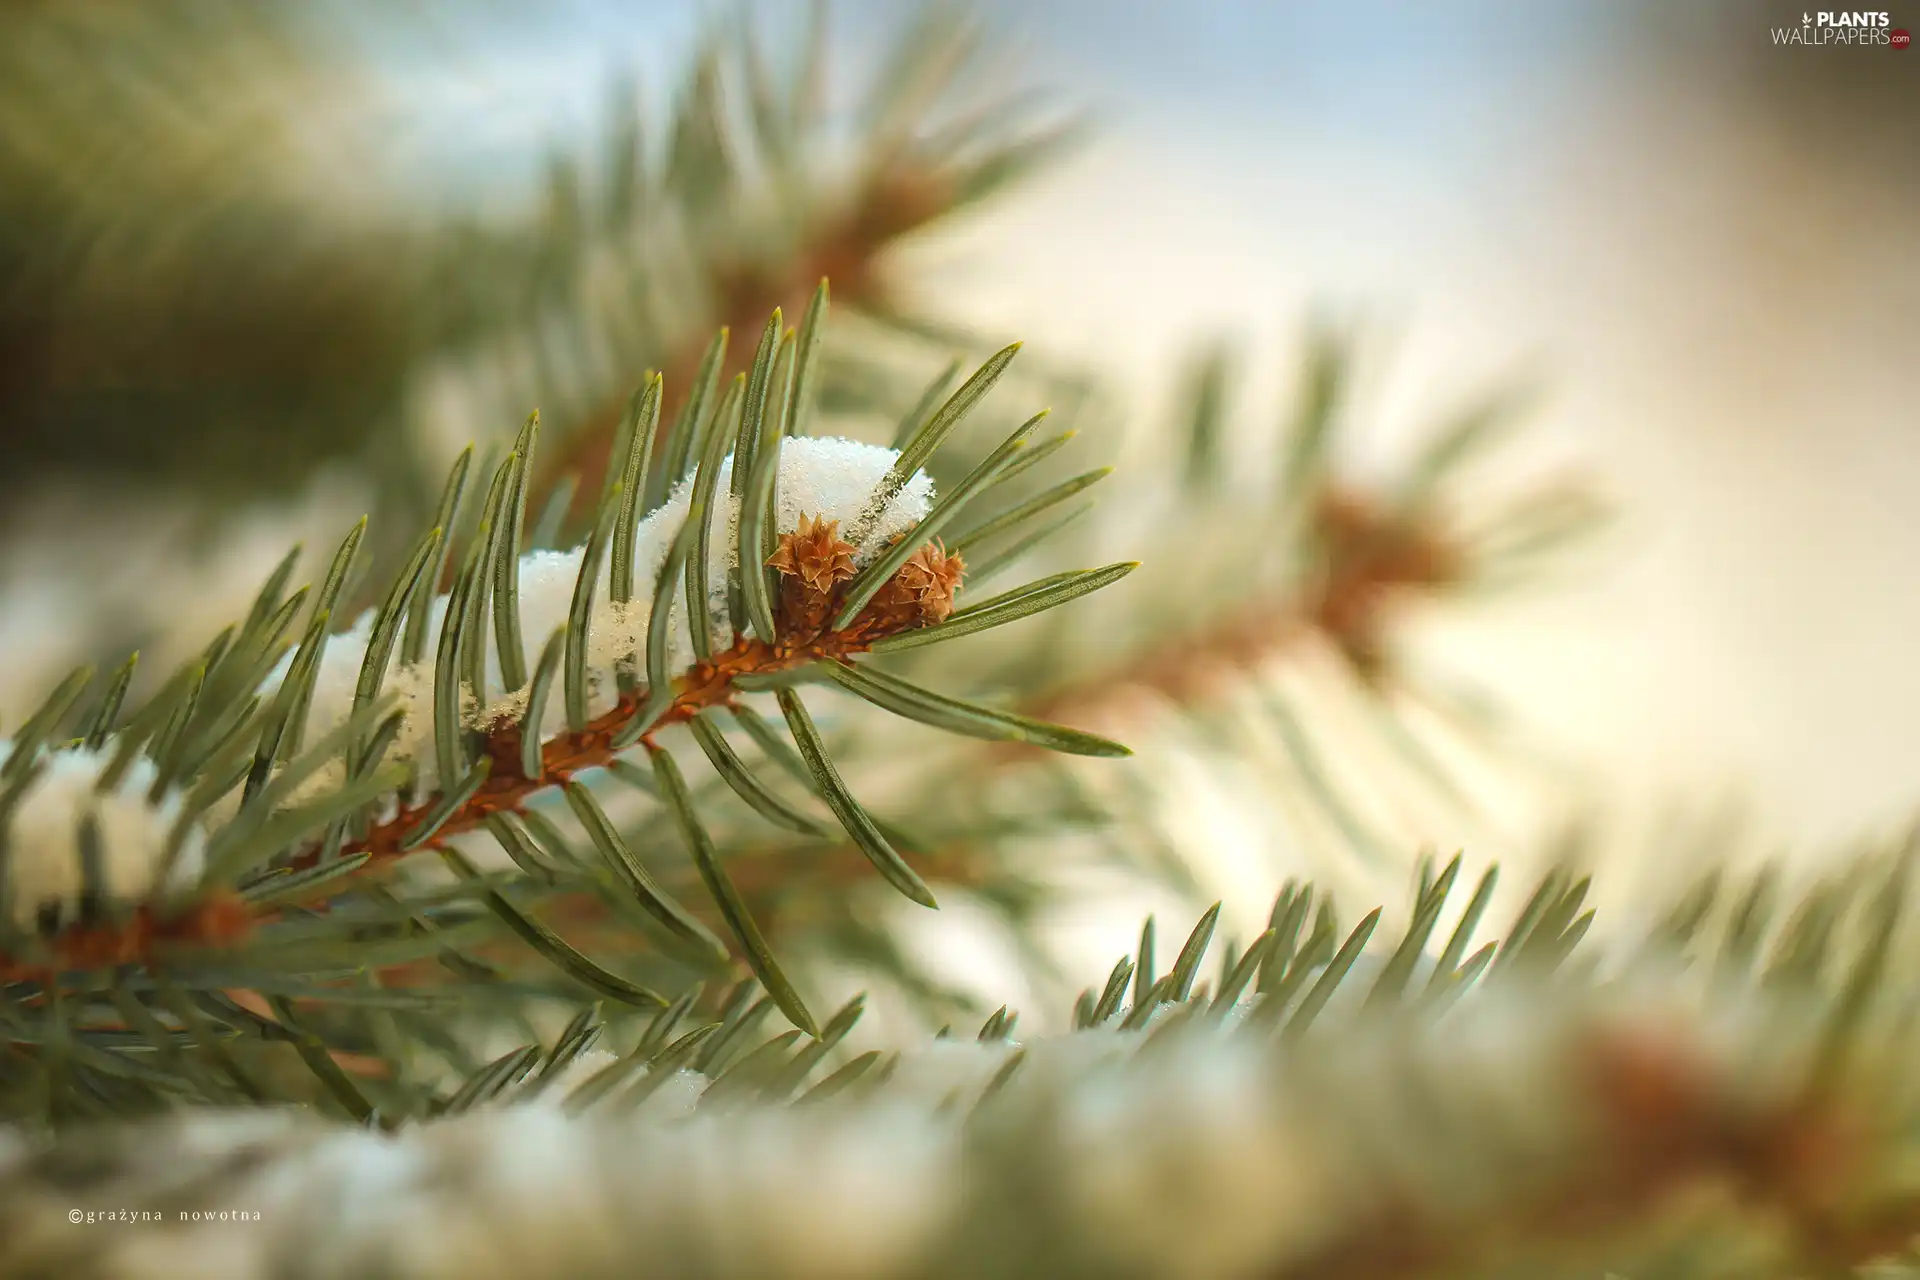 A snow-covered, twig, fir